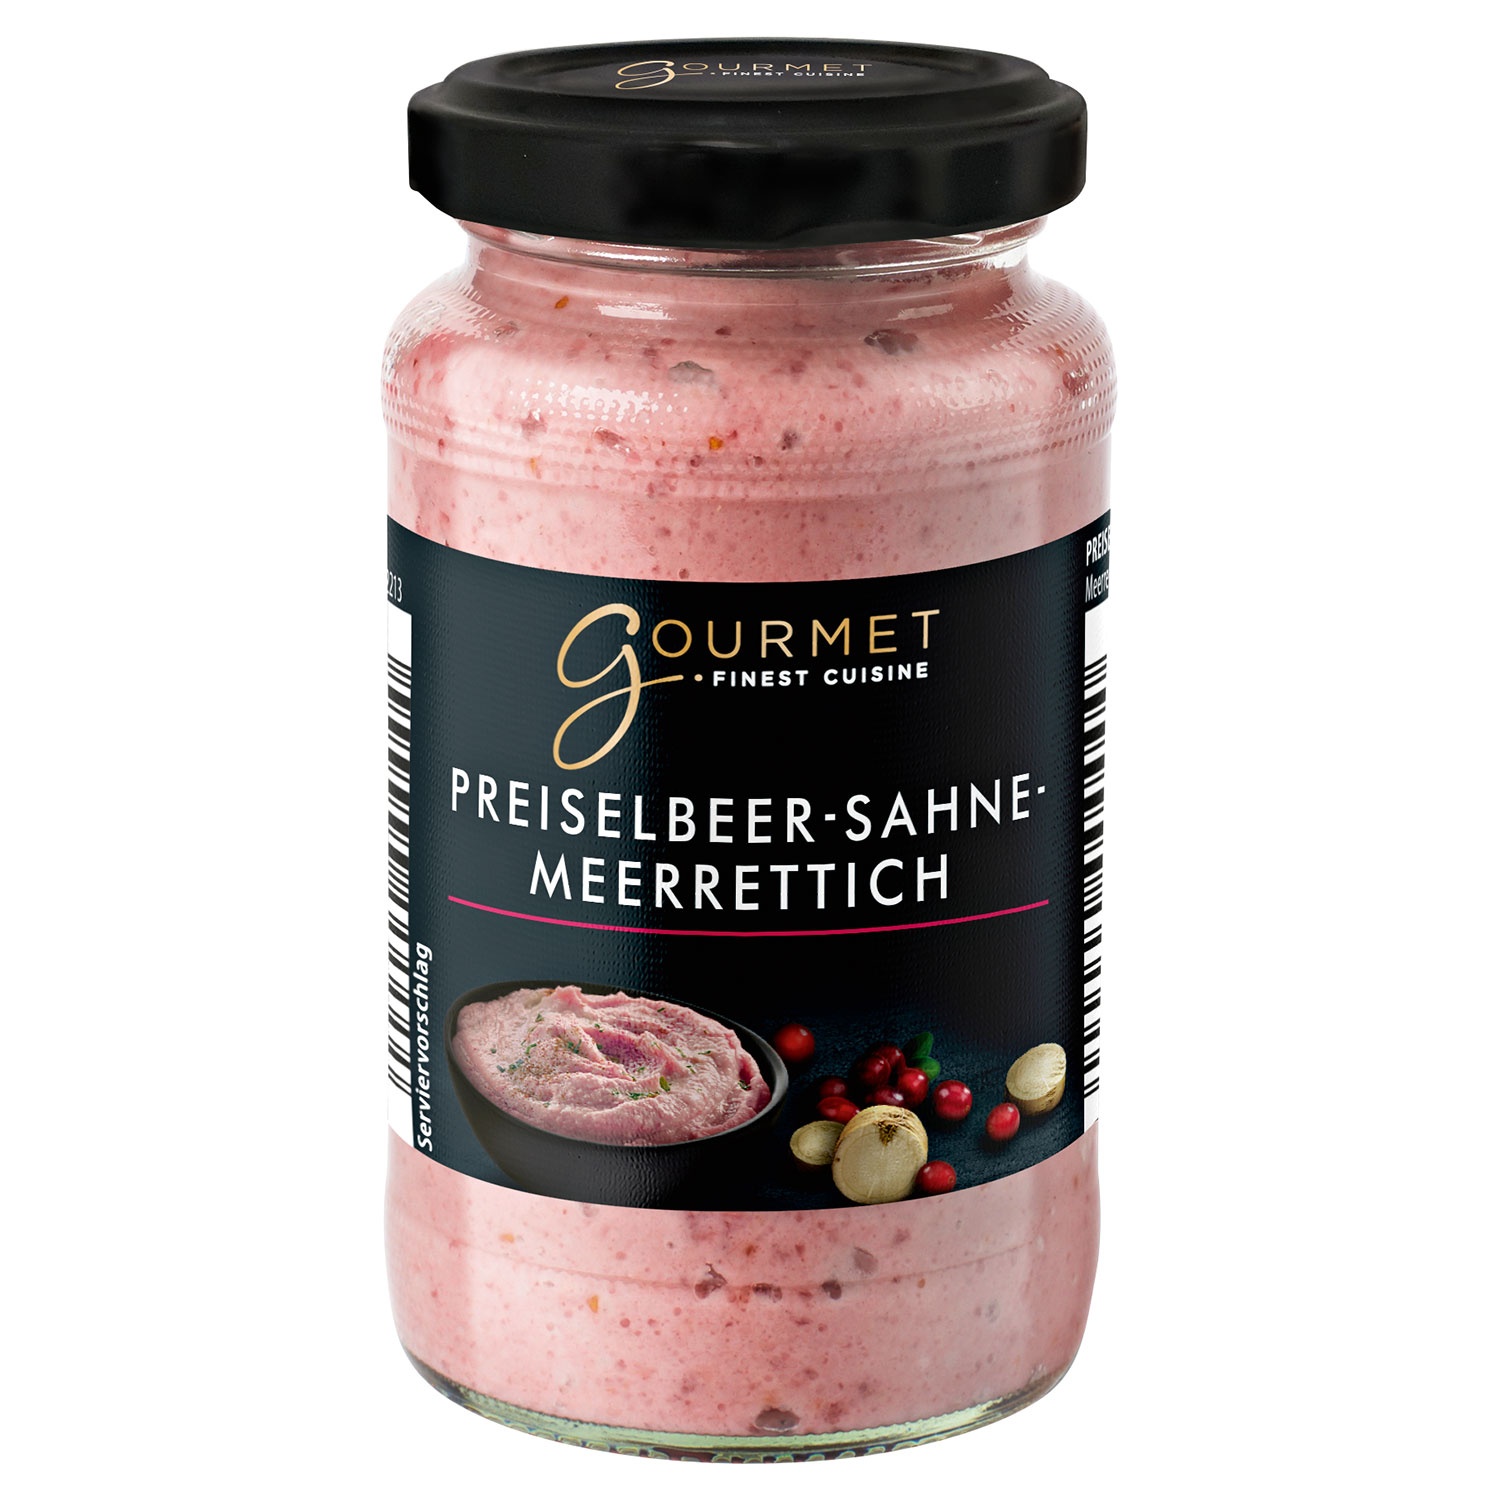 GOURMET FINEST CUISINE Sahne-Meerrettich 150 ml, Preiselbeer | ALDI SÜD